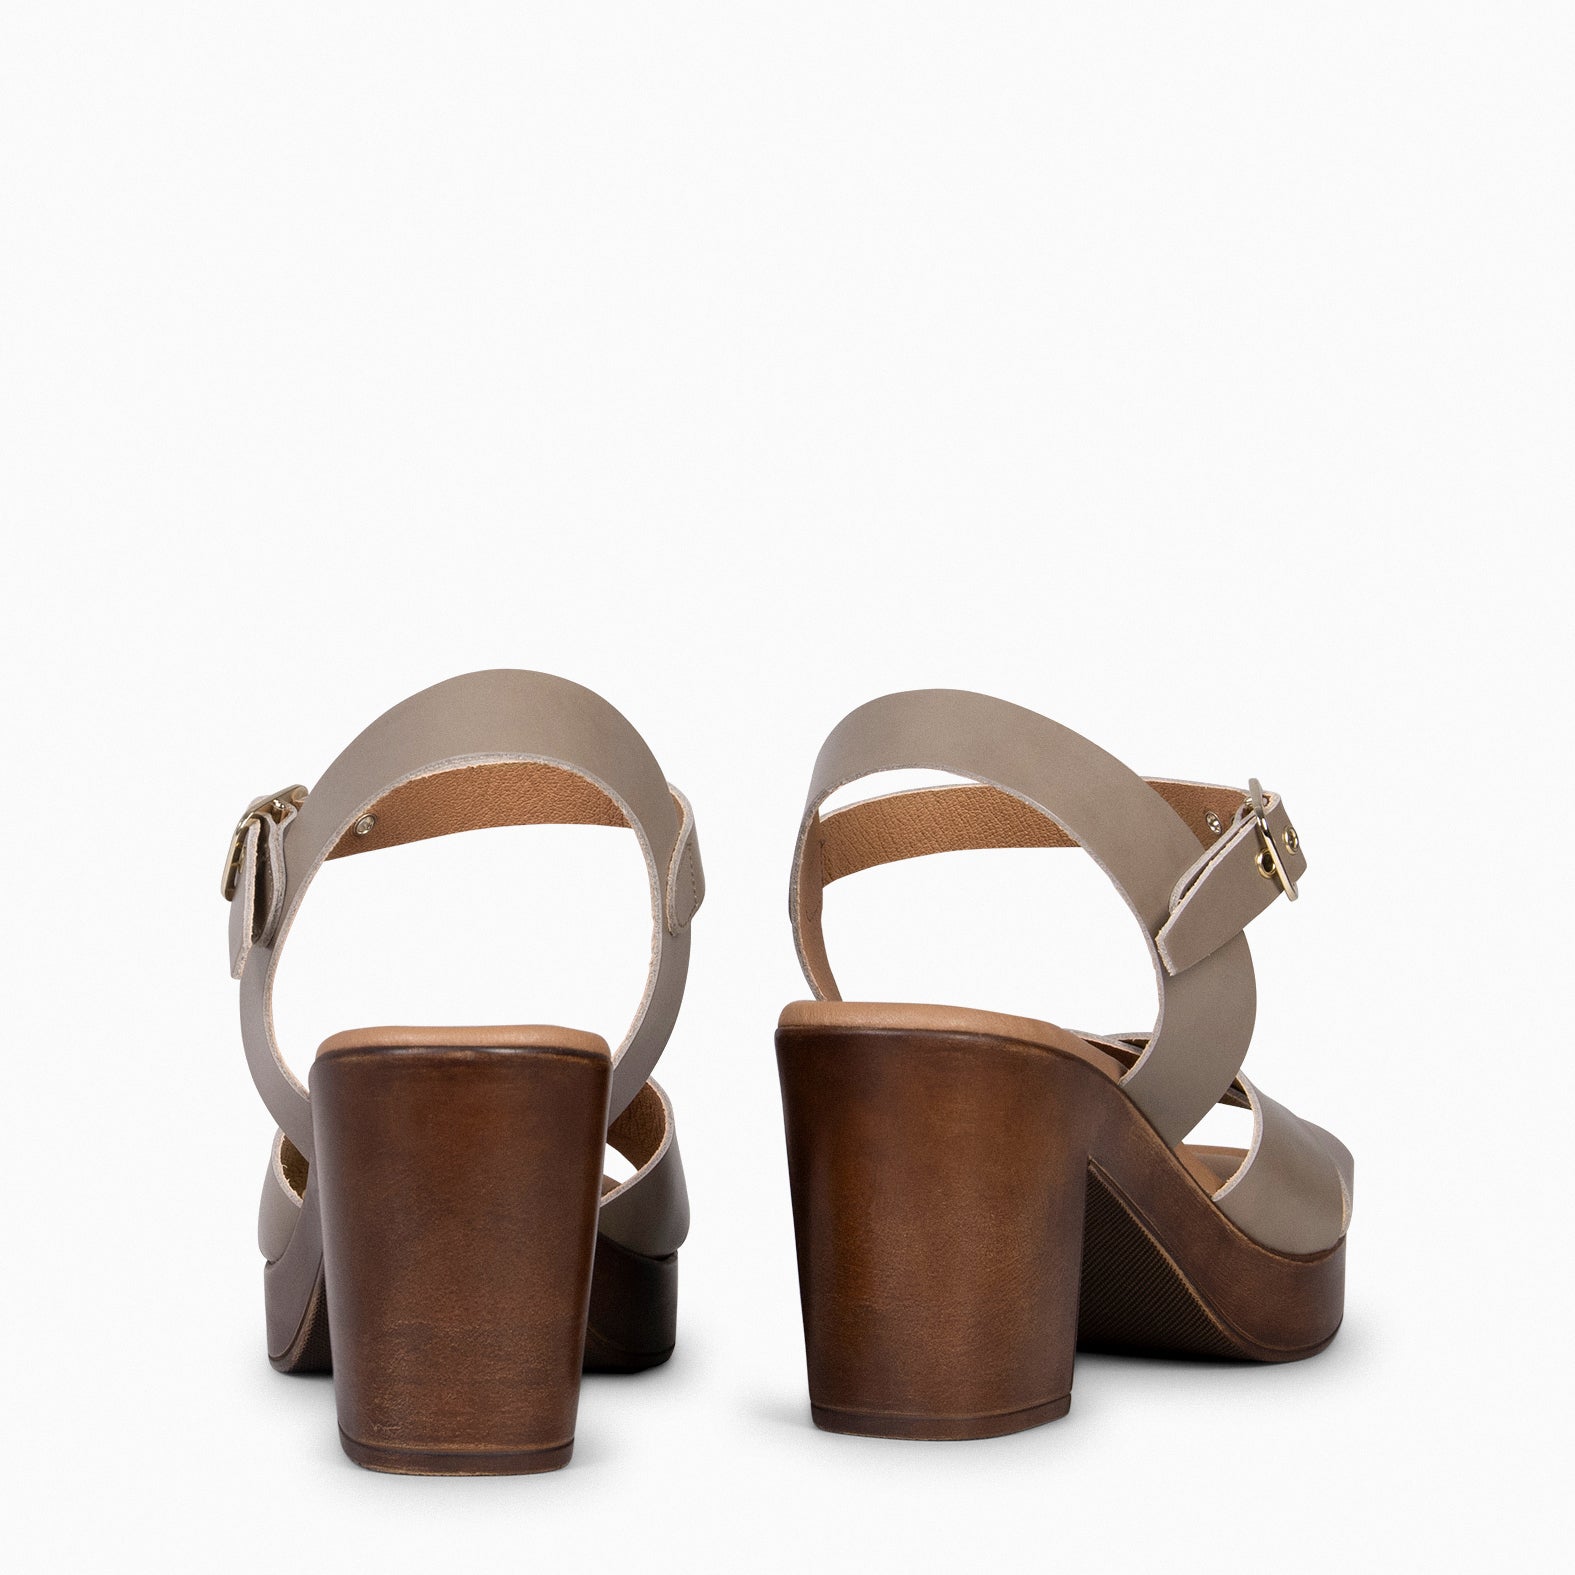 TAVIRA – TAUPE wide-heeled sandal